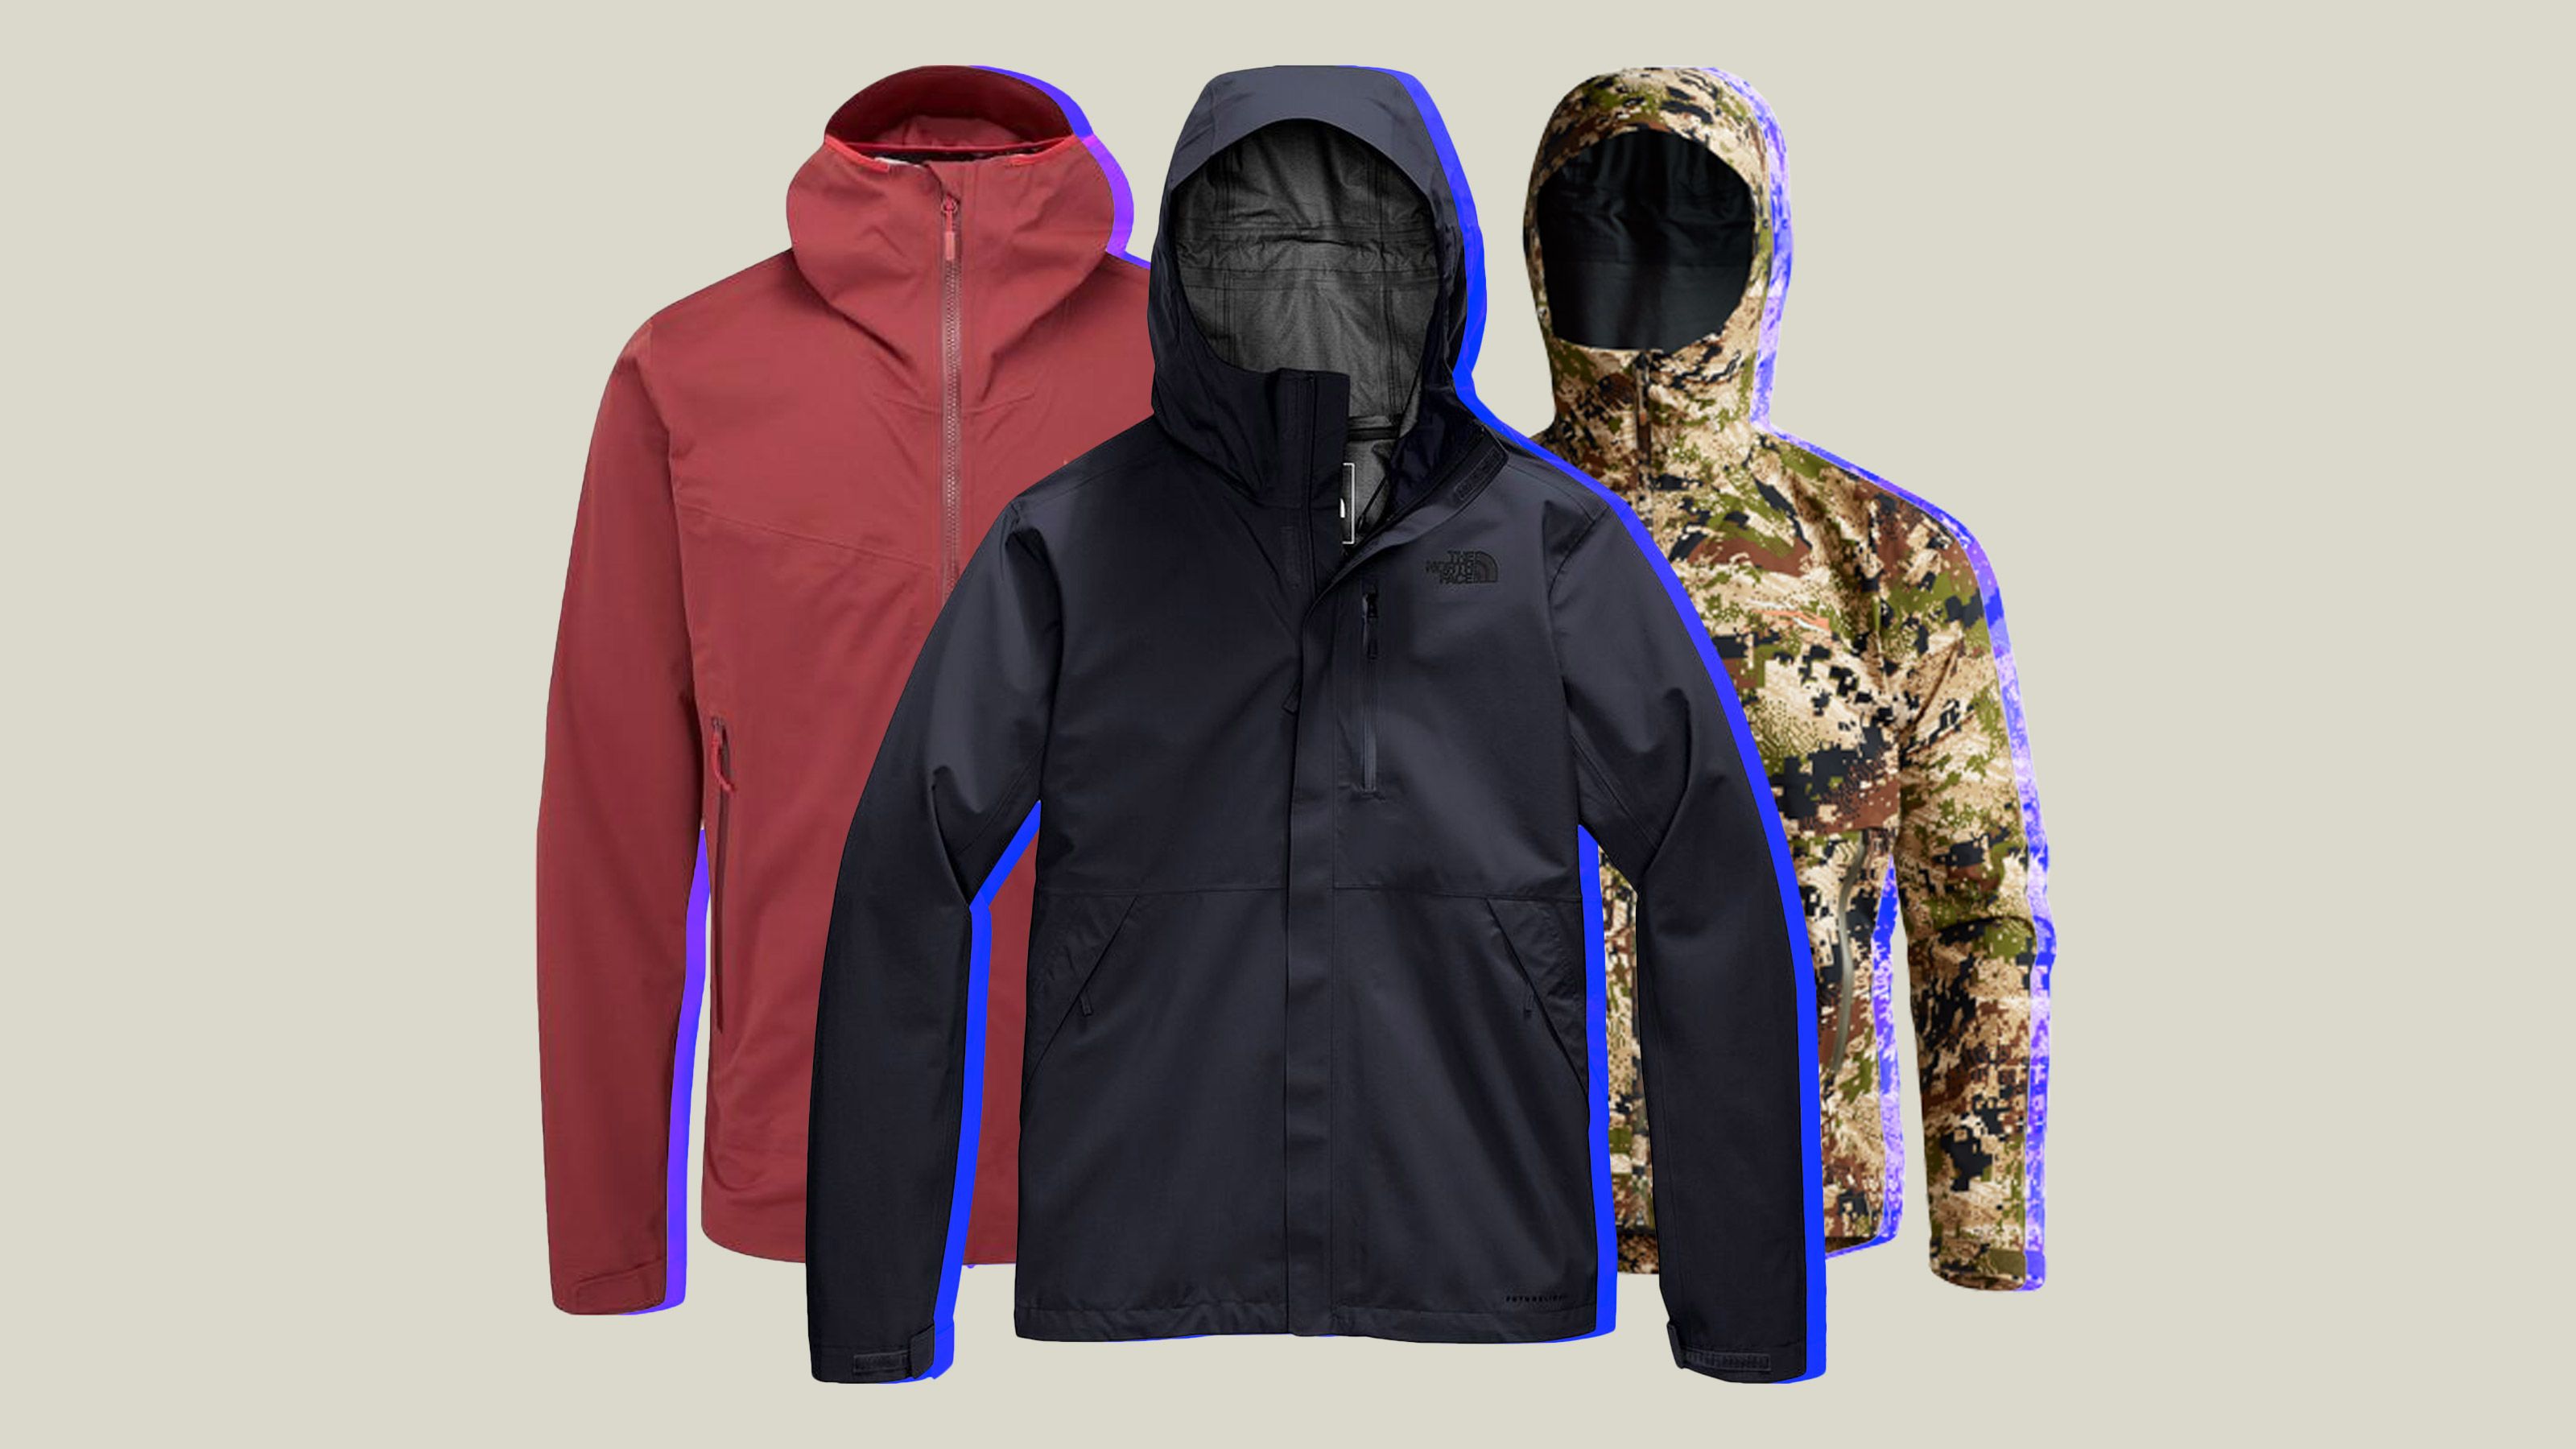 TIGER FORCE Mens Windbreaker Hooded Sweater Jacket Waterproof Running Rain Coat Active Softshell